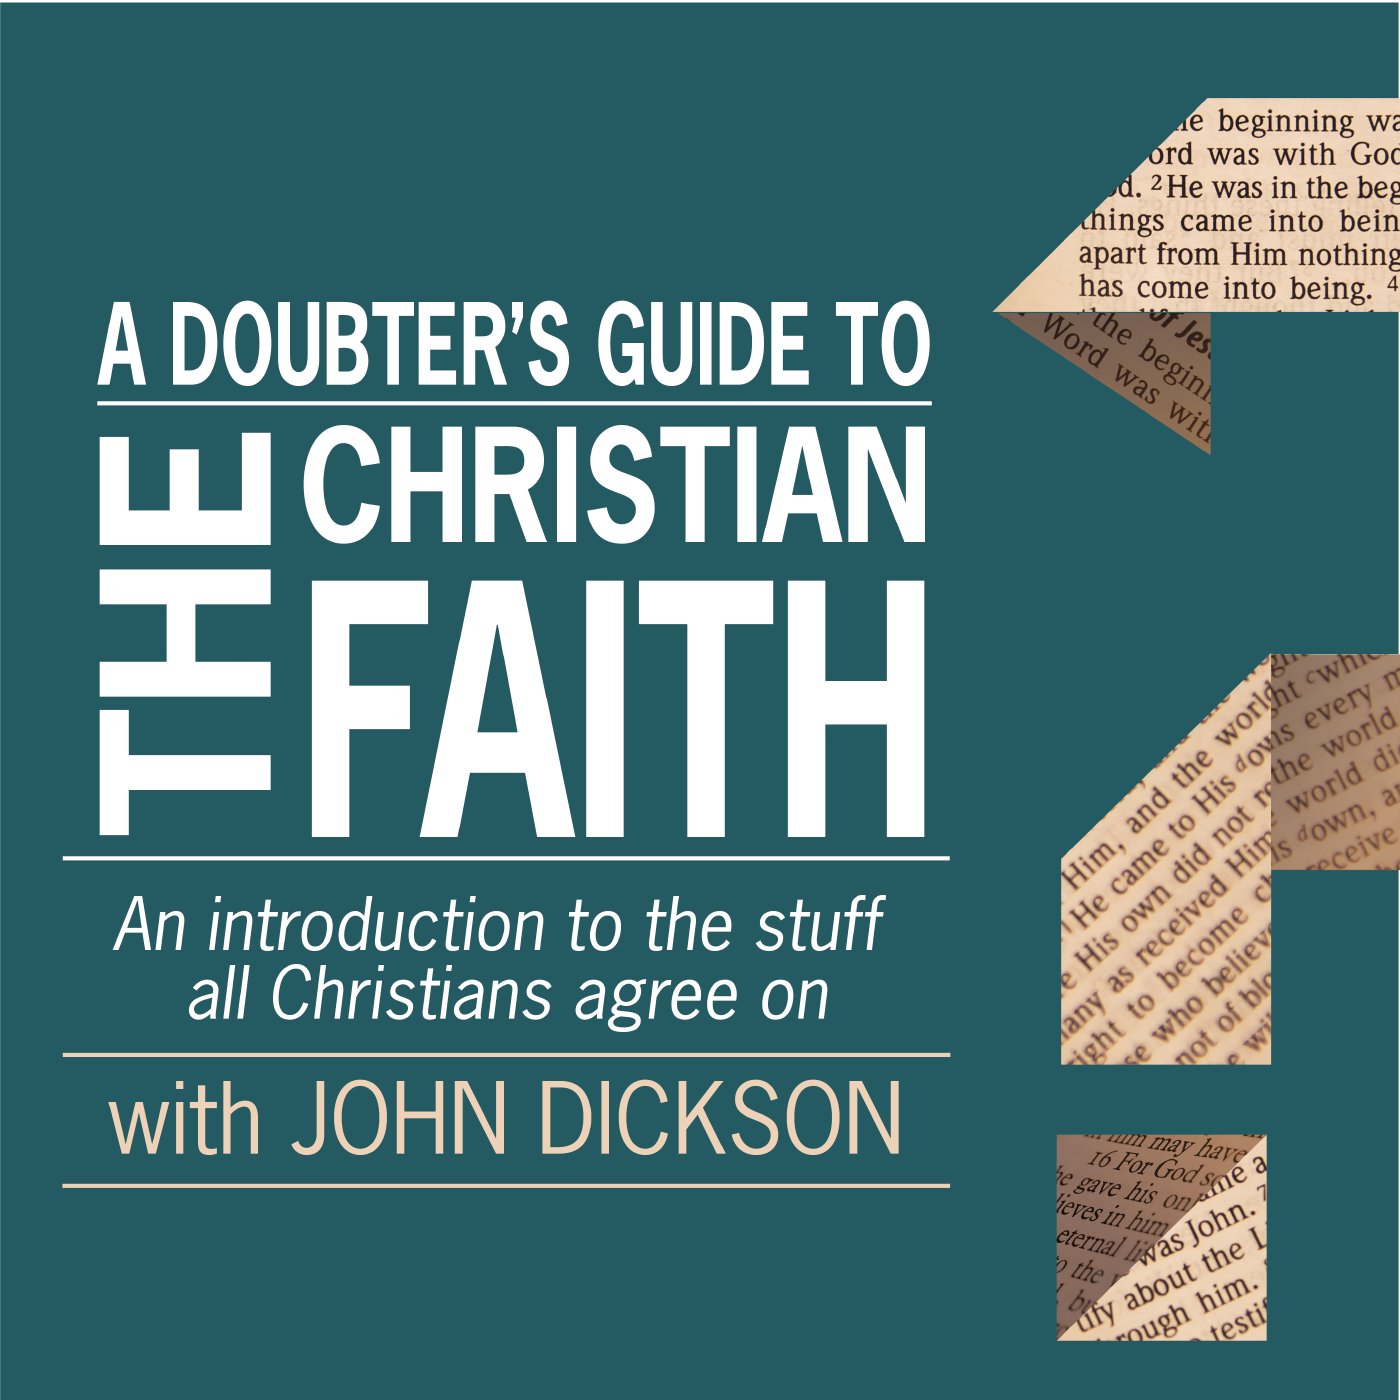 John Dickson: A doubters Guide to the Christian Faith